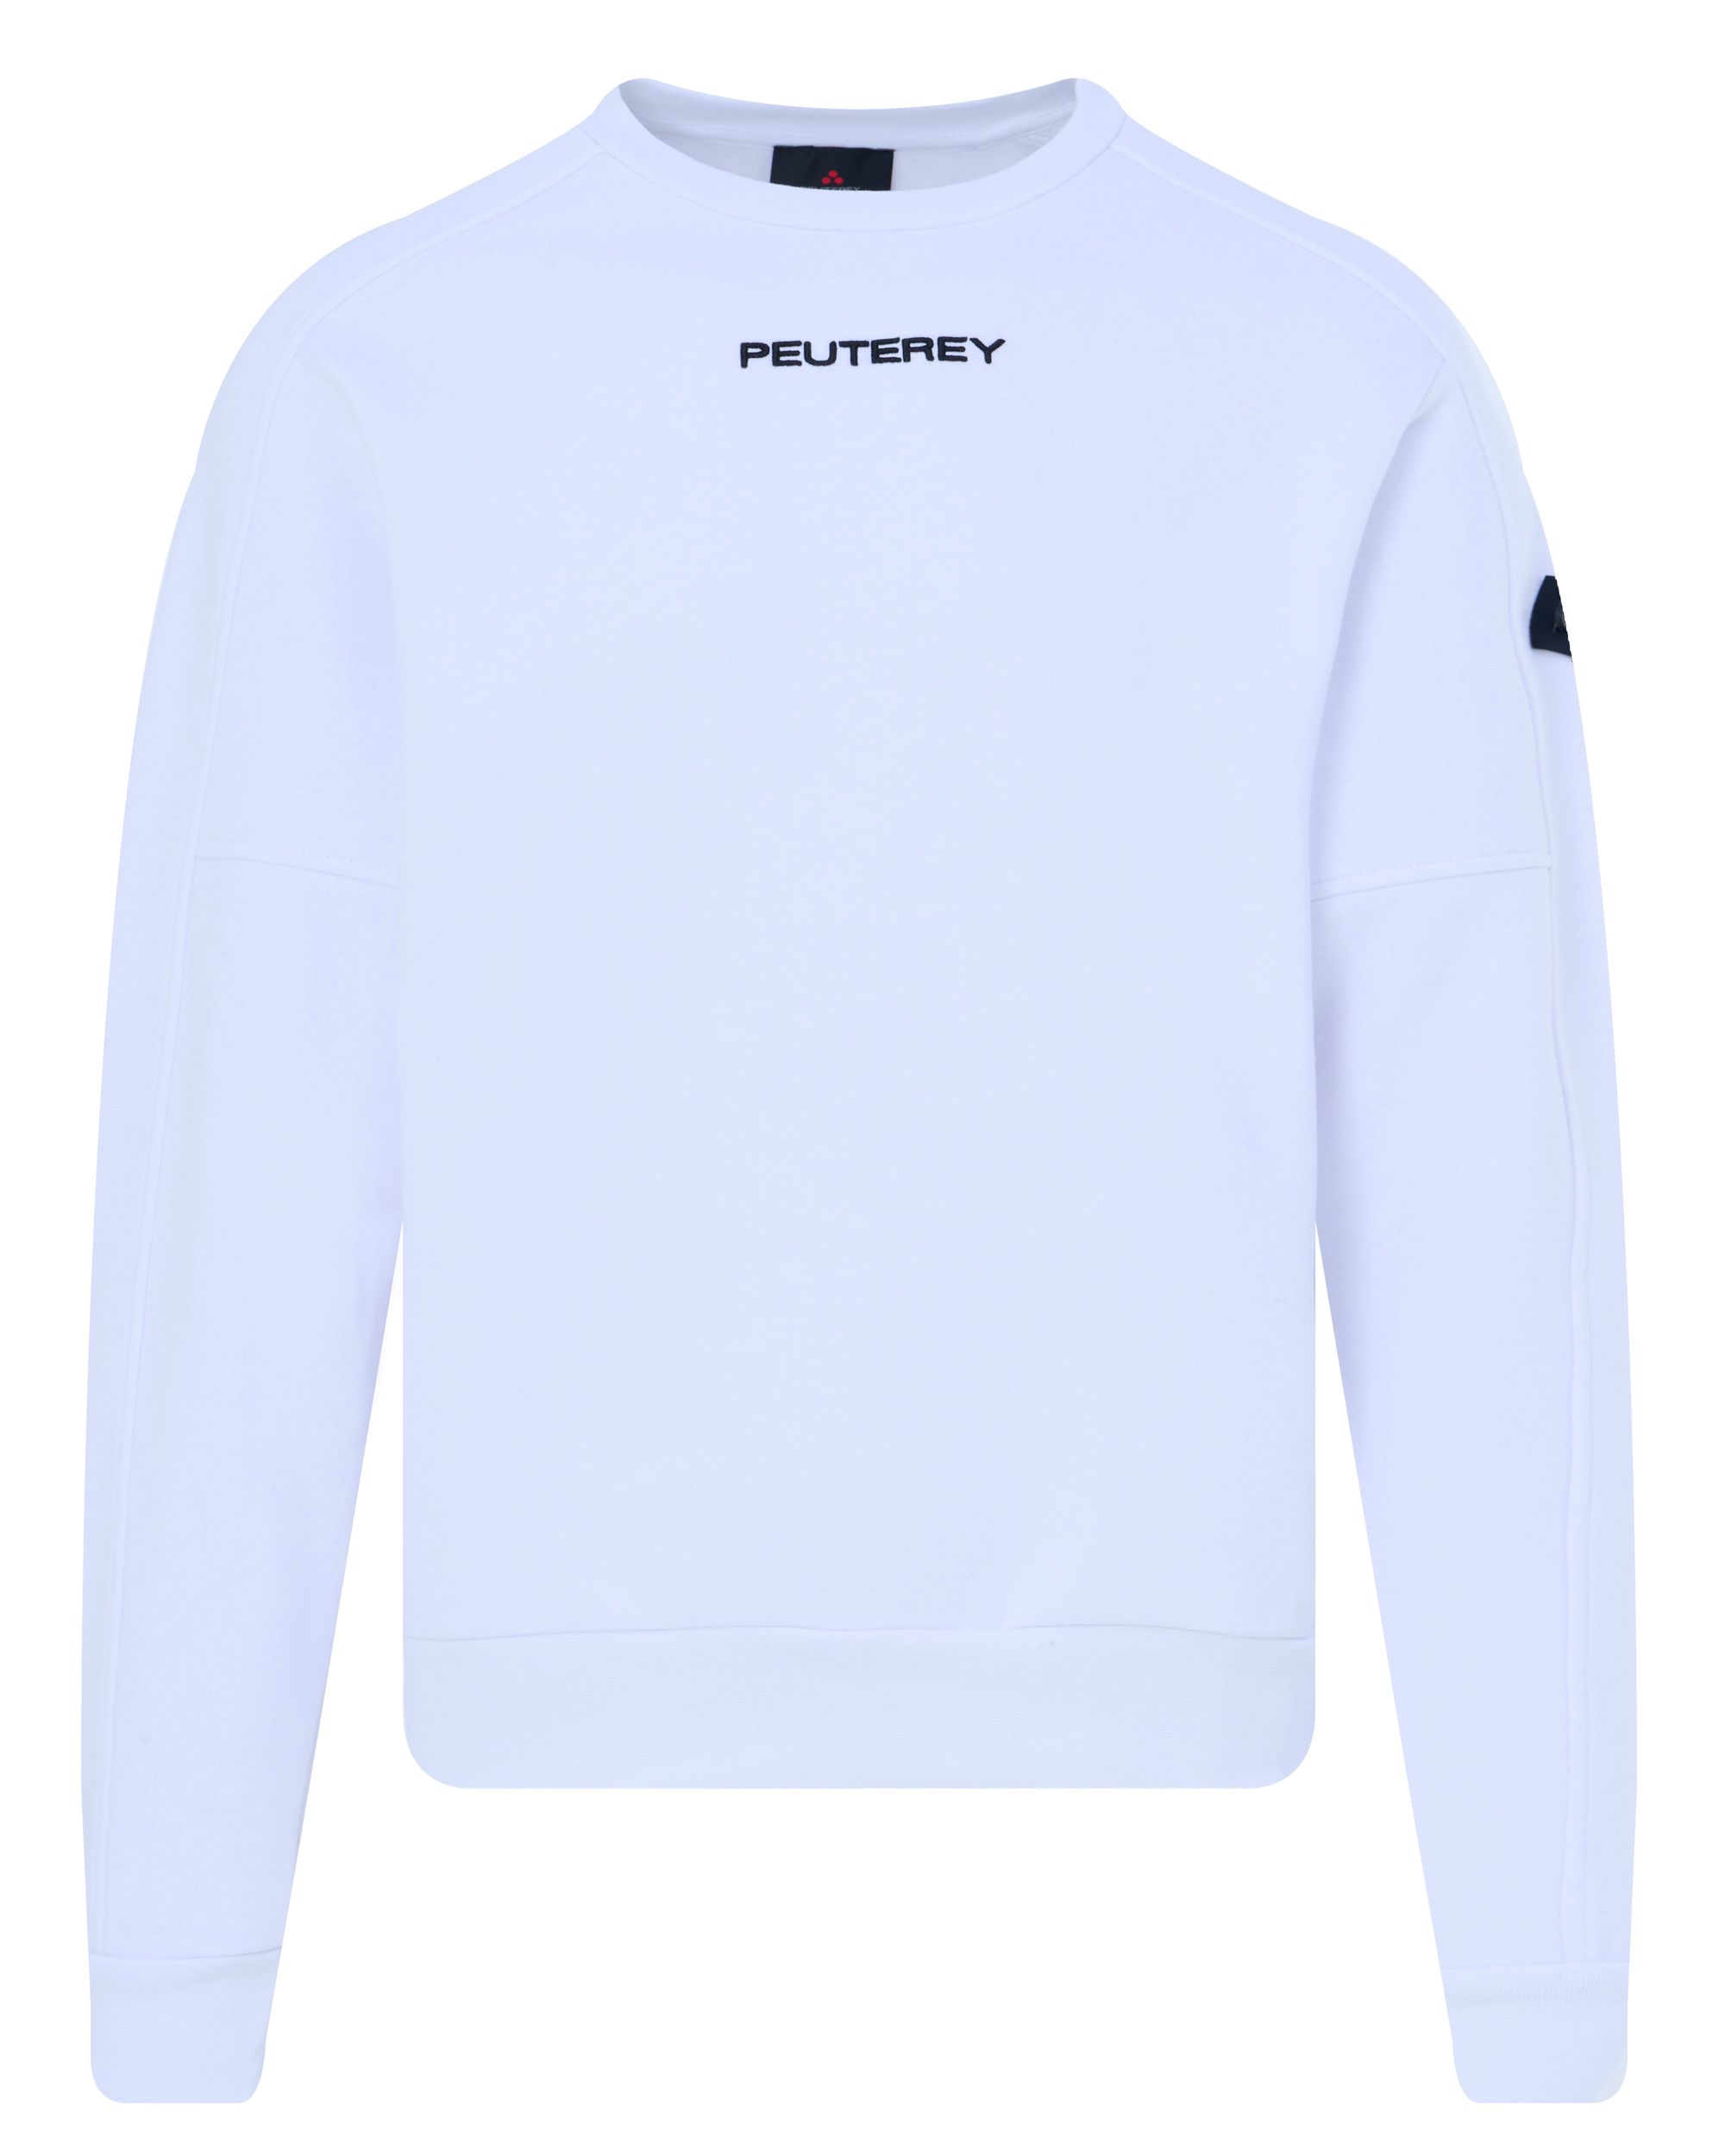 Peuterey Domak Sweater Off white 088210-001-L